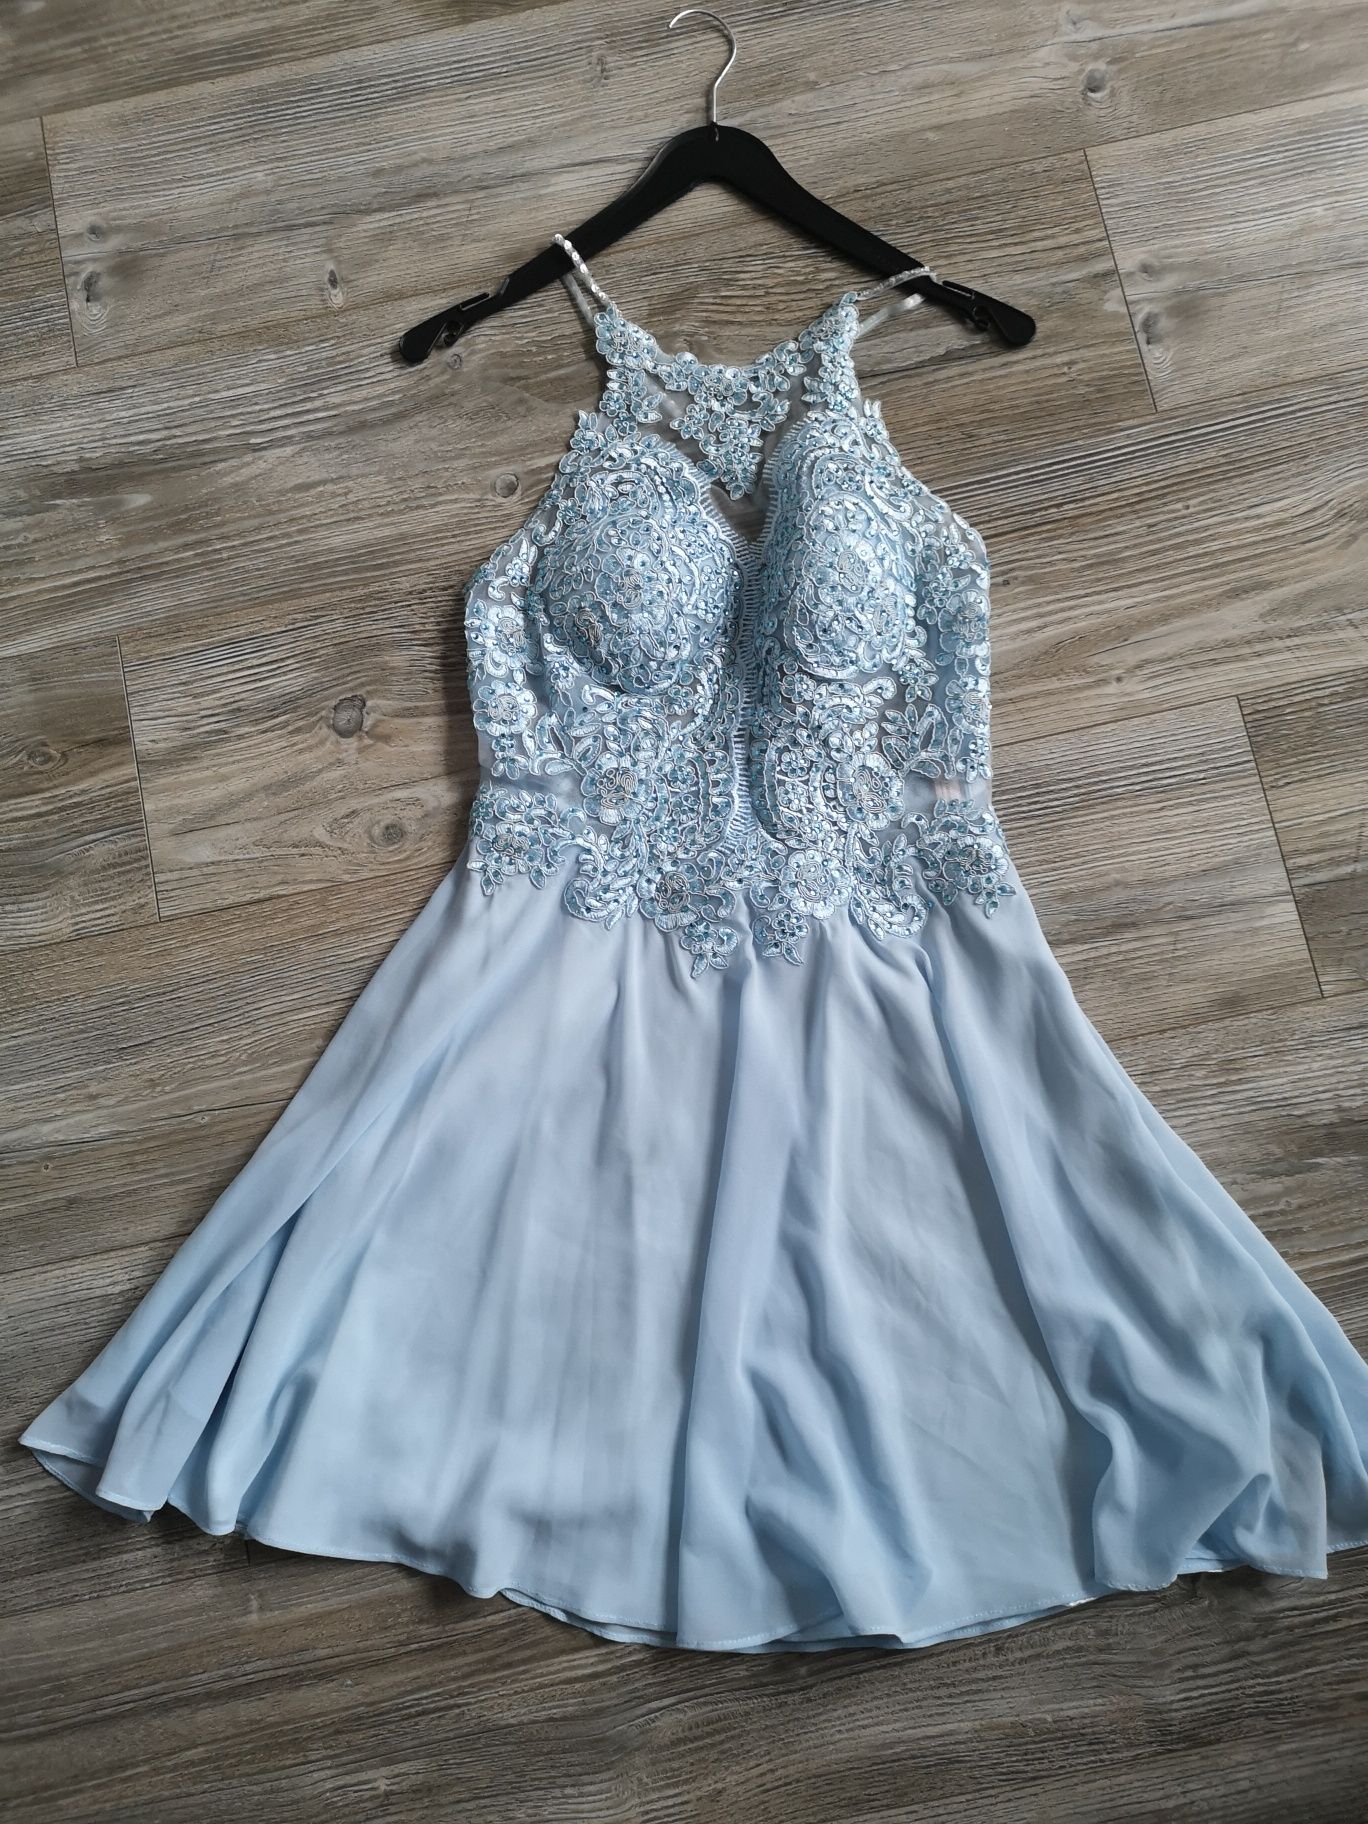 Sukienka MERCEDES Krótka błękitna wesele, studniówka